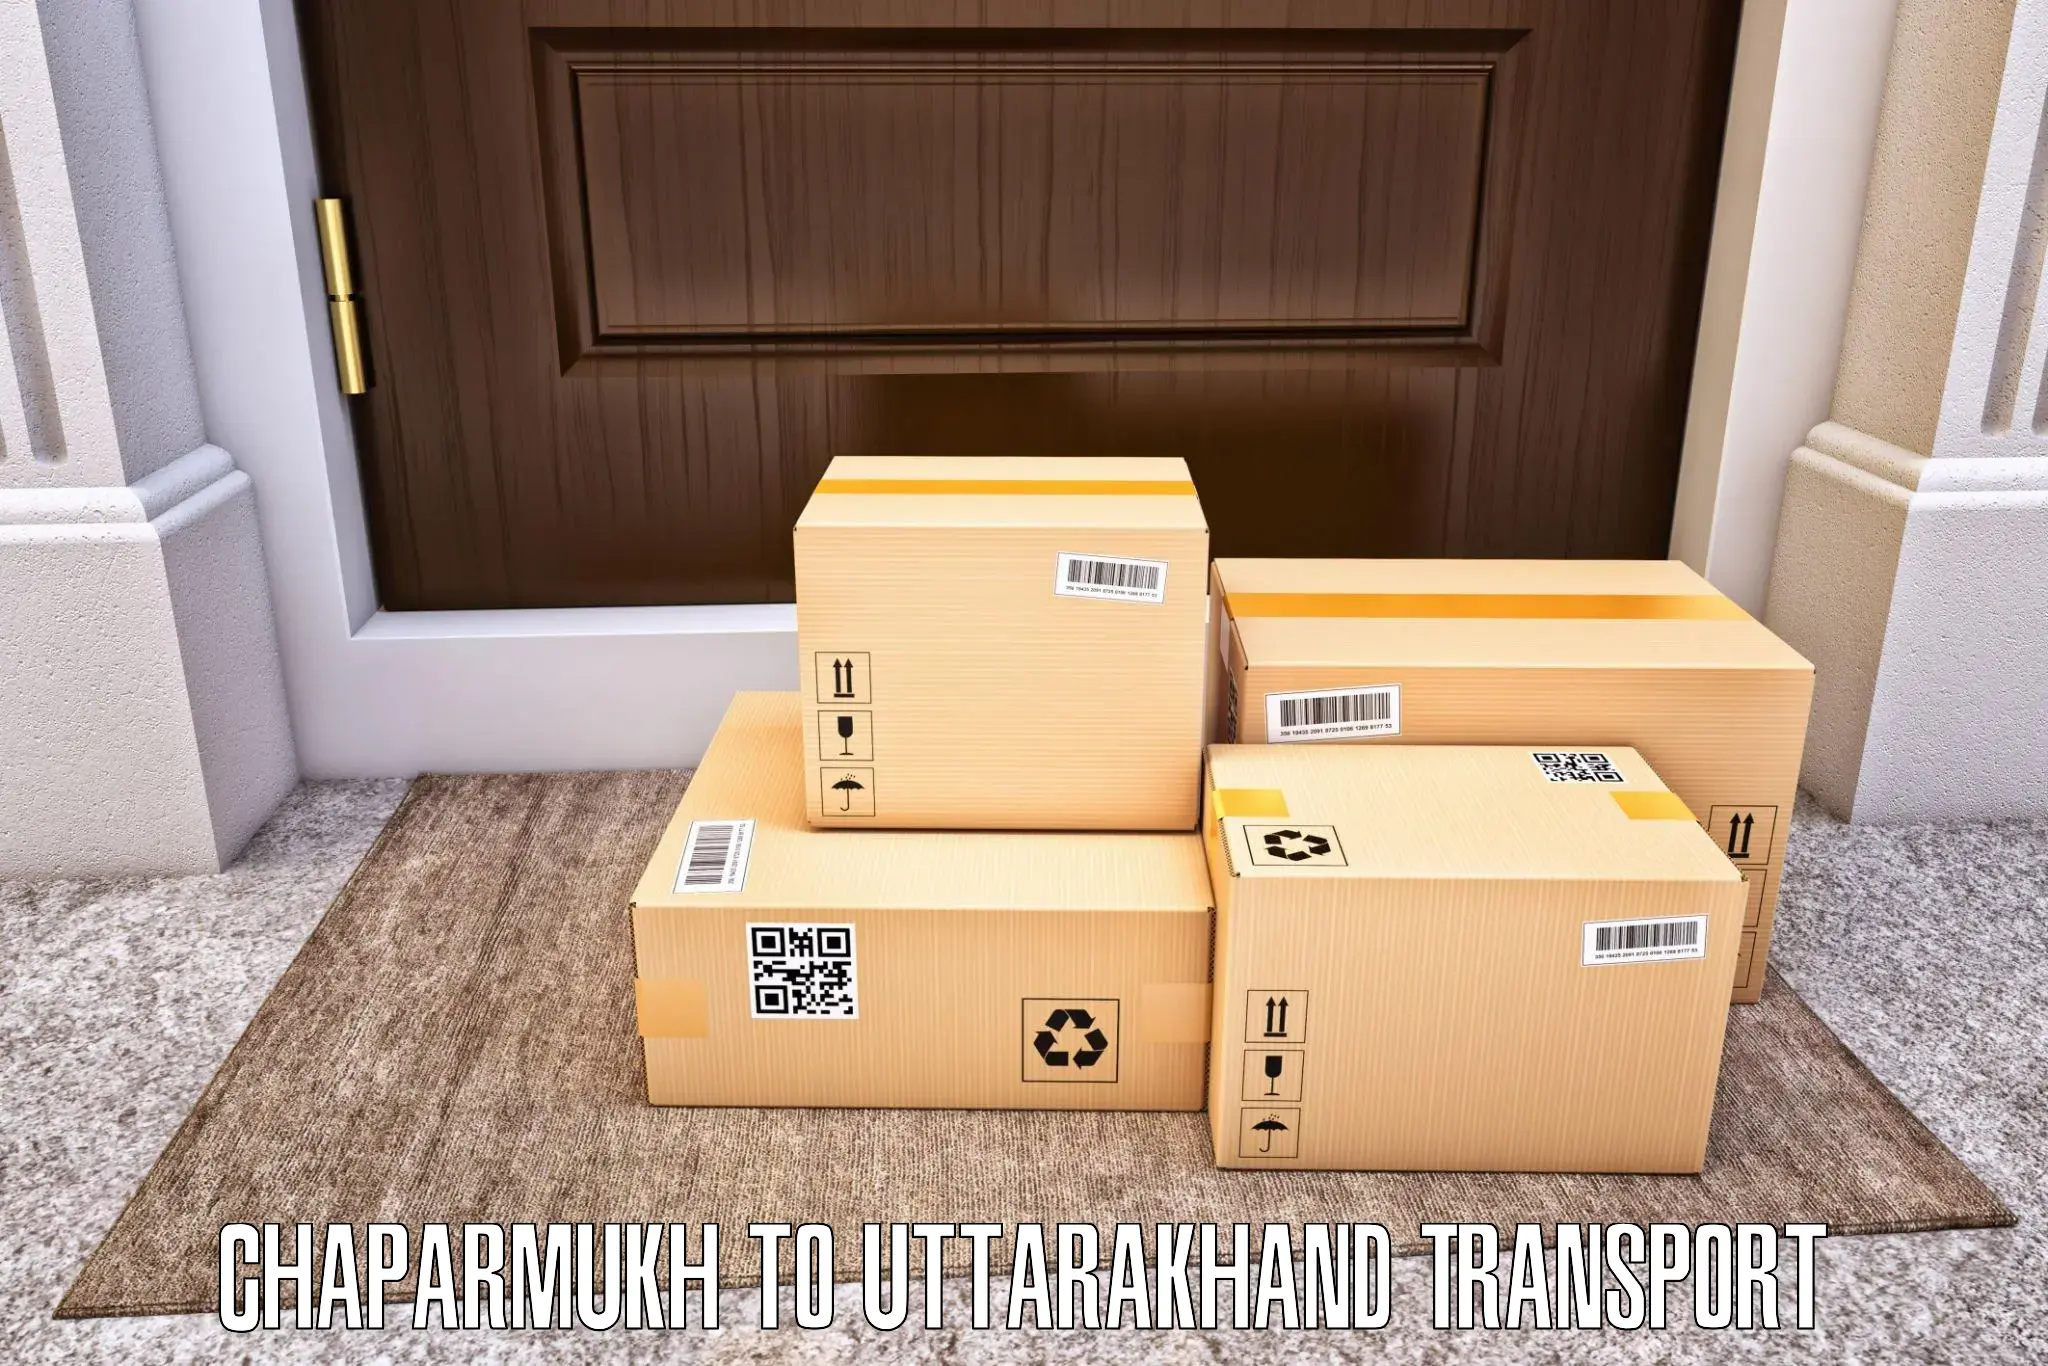 Furniture transport service Chaparmukh to Haridwar